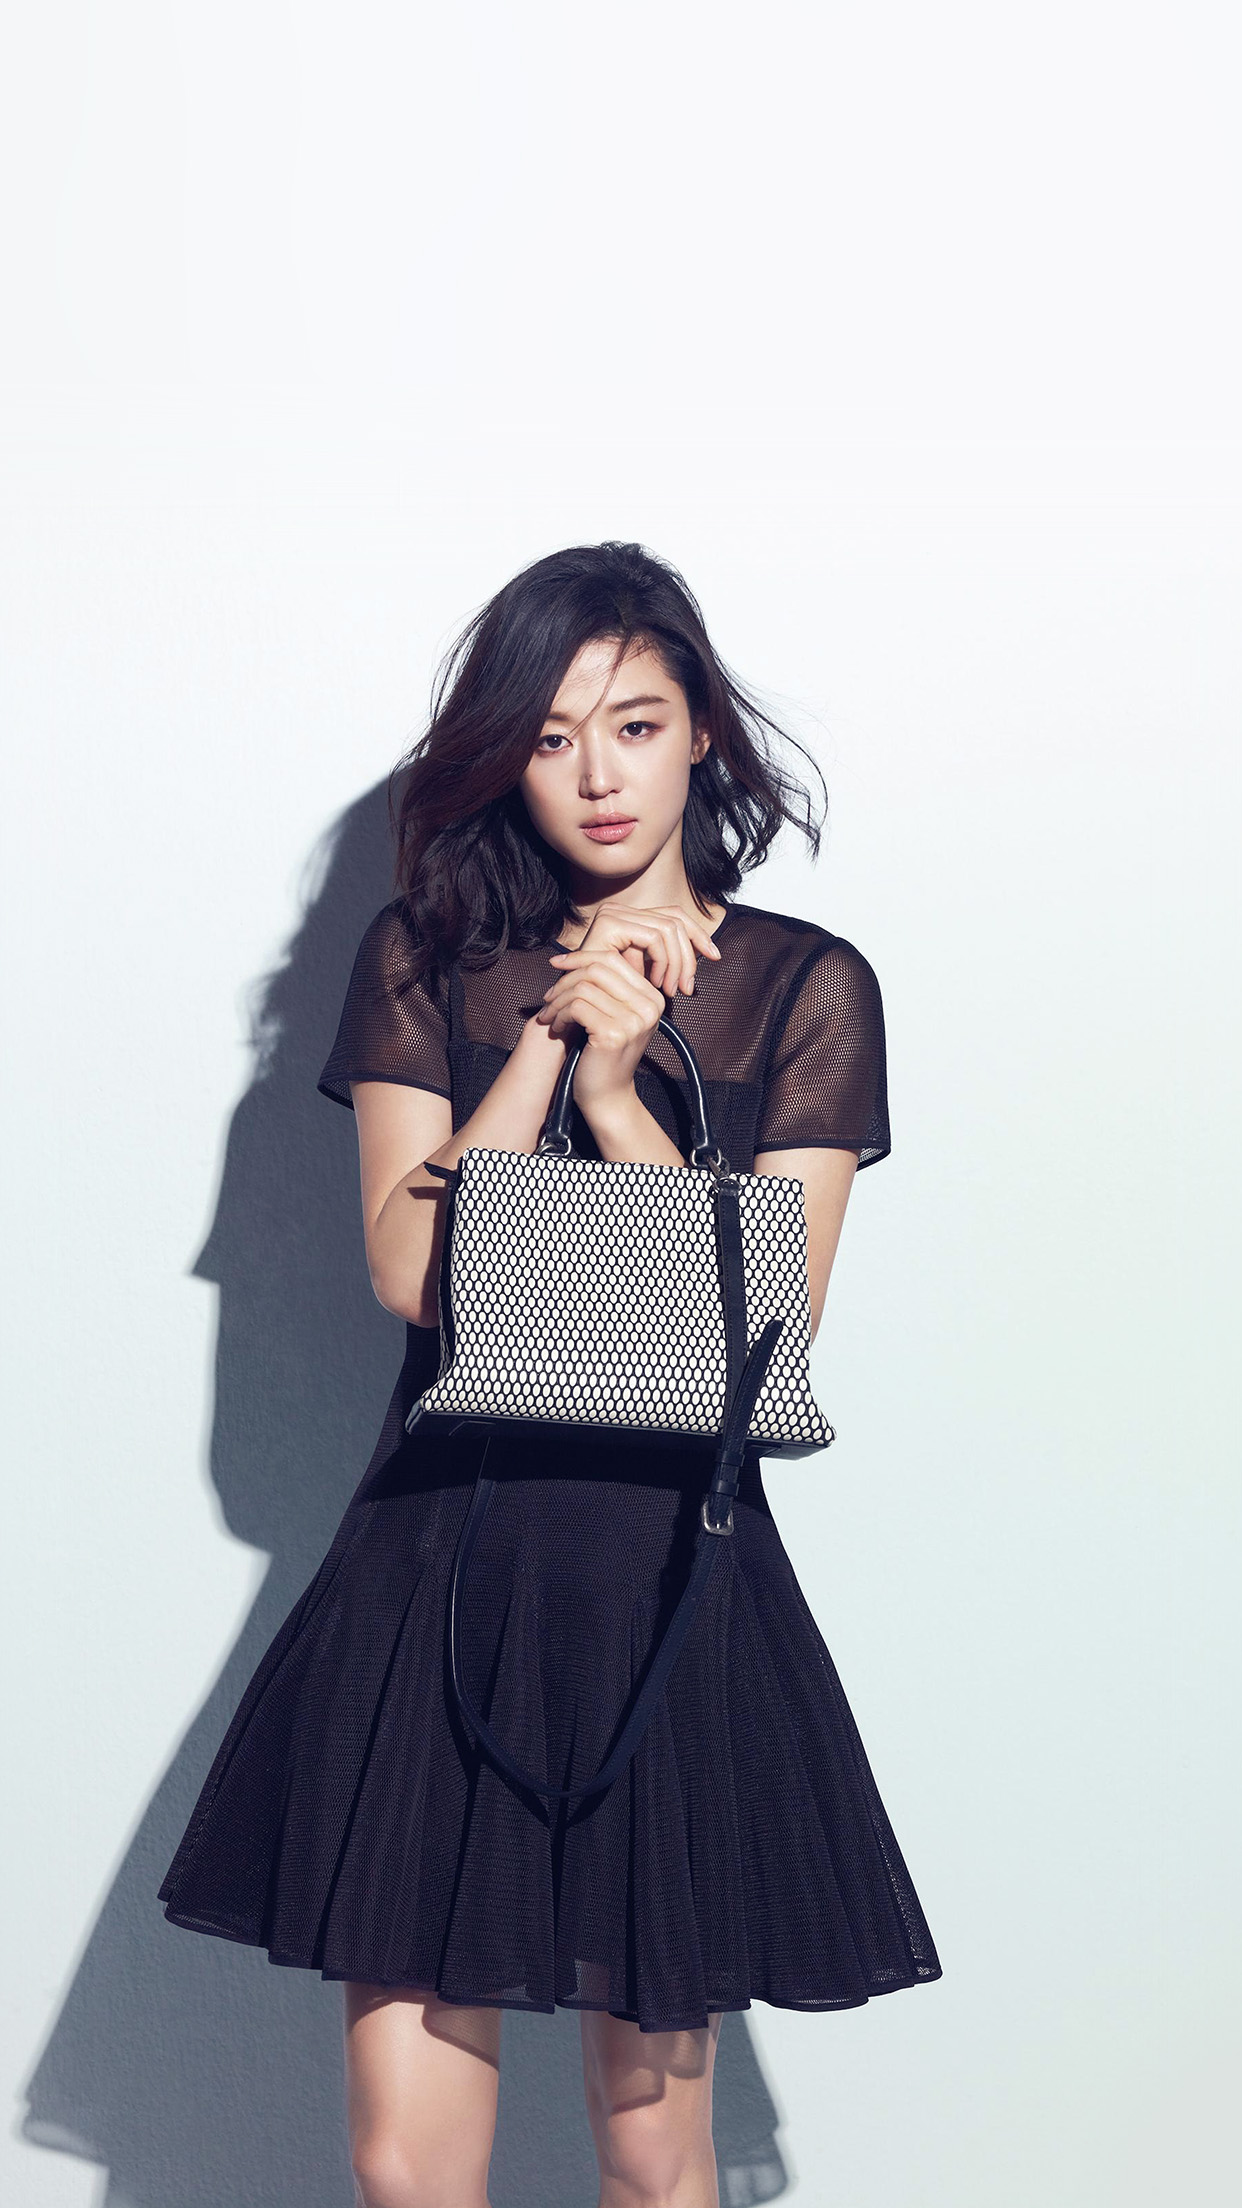 Jun Ji Hyun Actress Kpop Cute Beauty Blue Android wallpaper